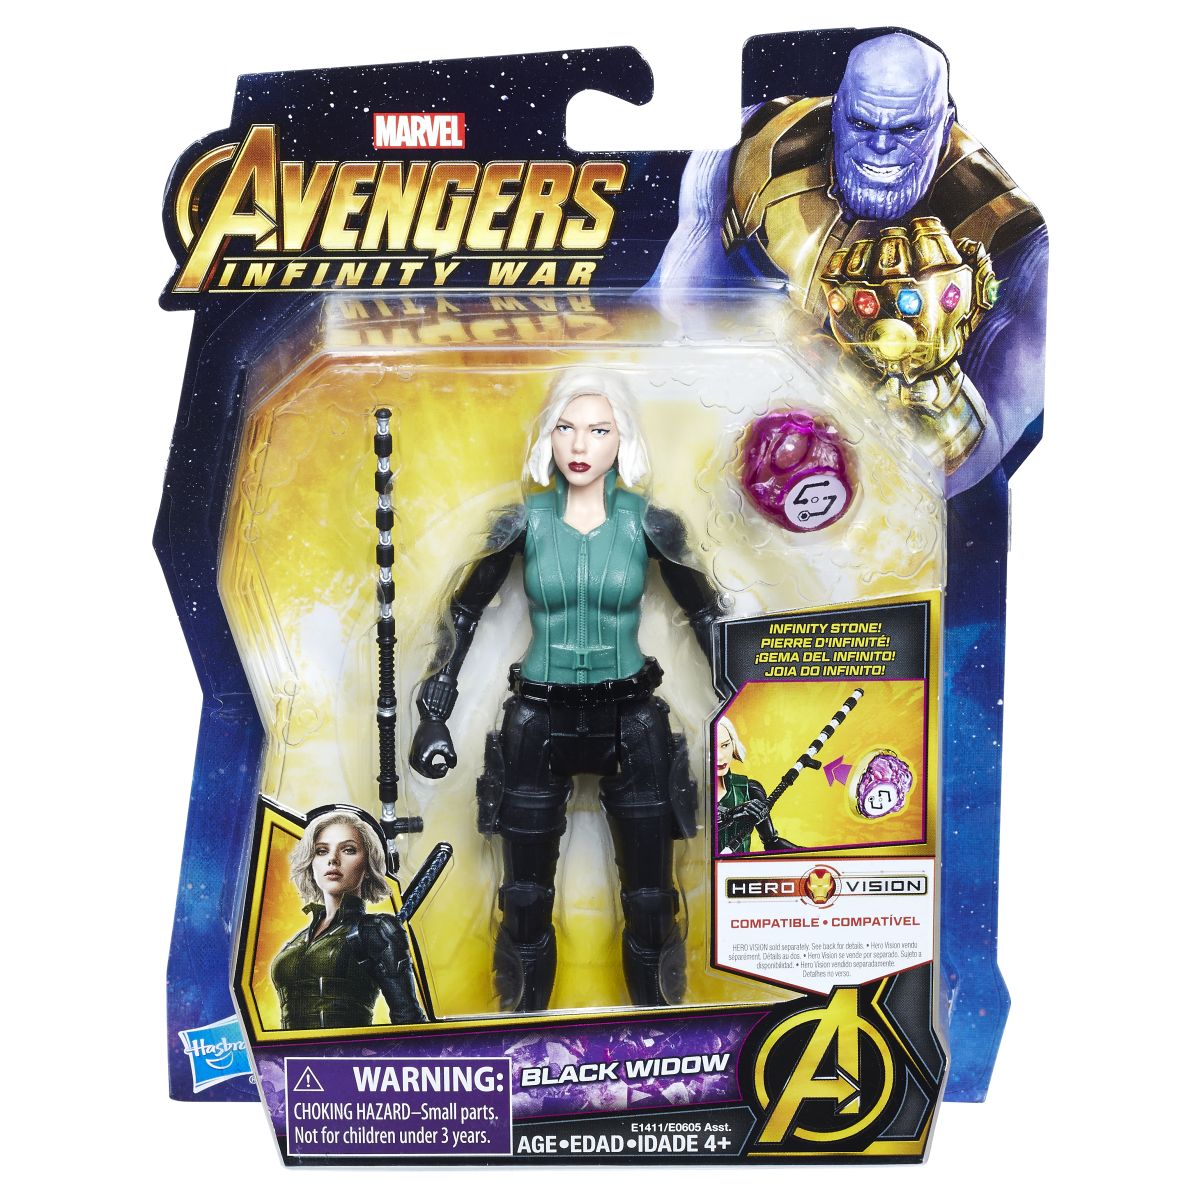 Marvel Avengers Infinity War 6 Inch Figure Assortment Black Widow In Pkg